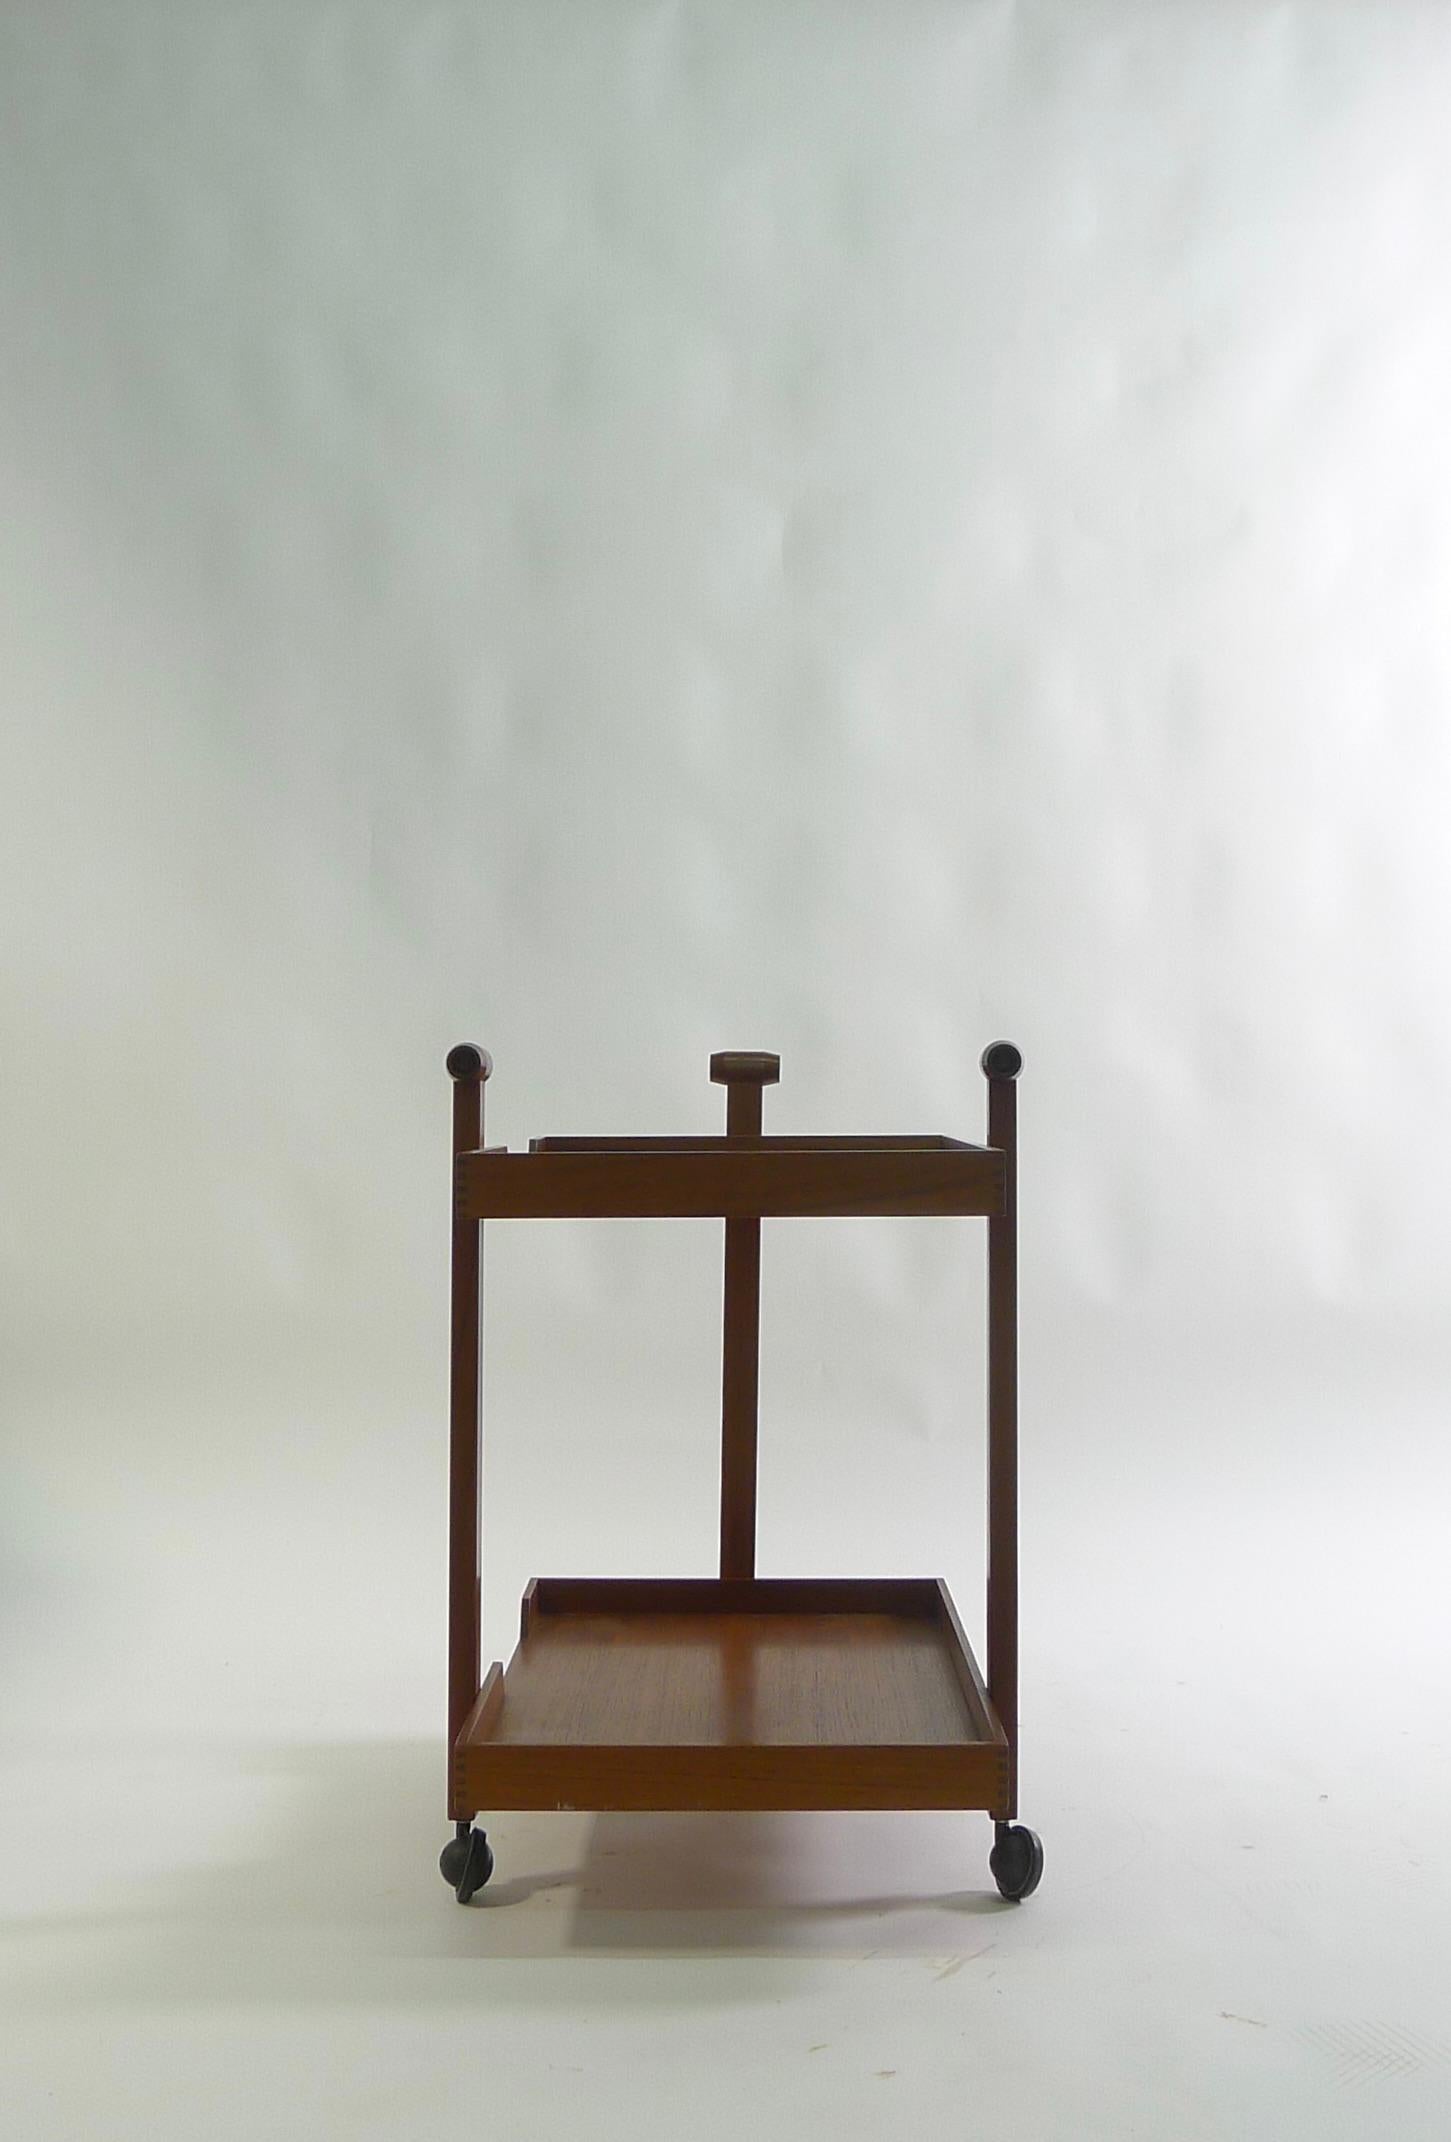 Woodwork Franco Albini and Franca Helg, Model CR20 Teak Serving Table, Design, 1958